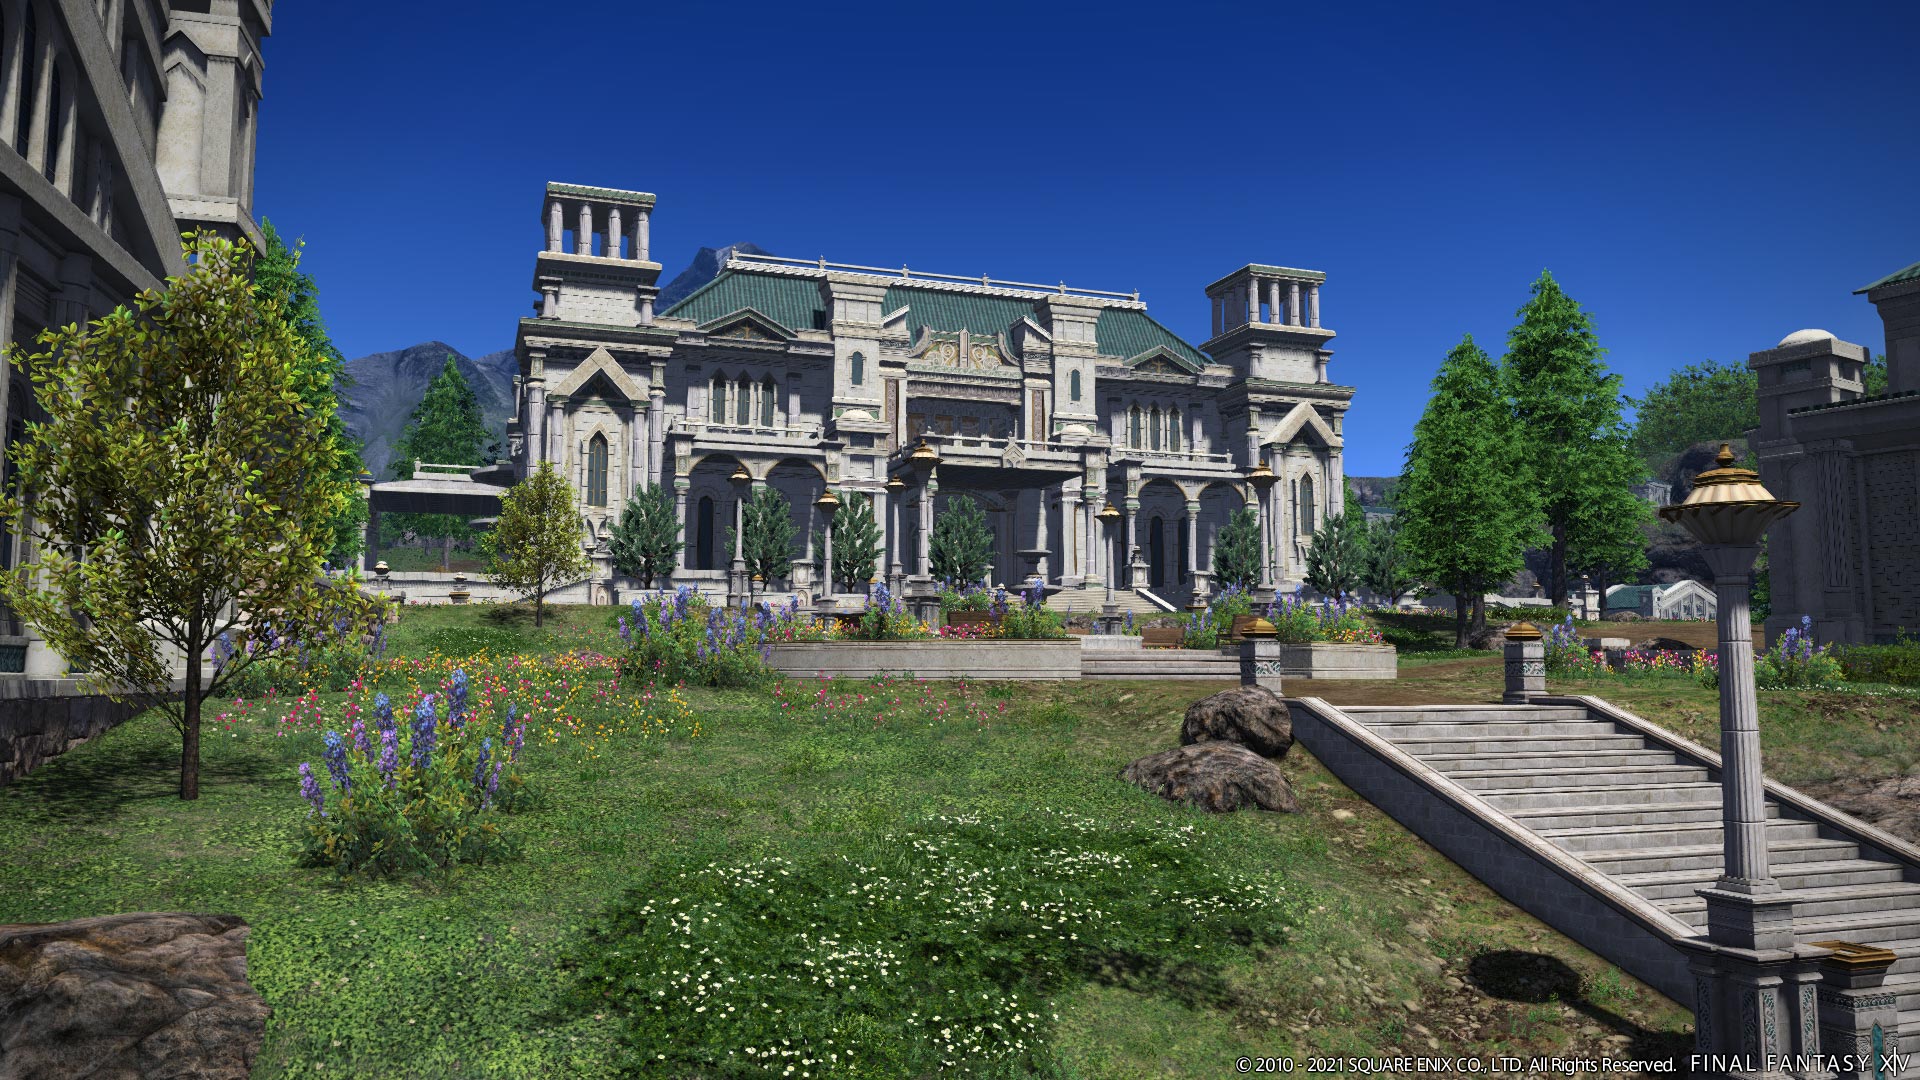 Final Fantasy XIV Found A Virtual Solution to The Housing Crisis